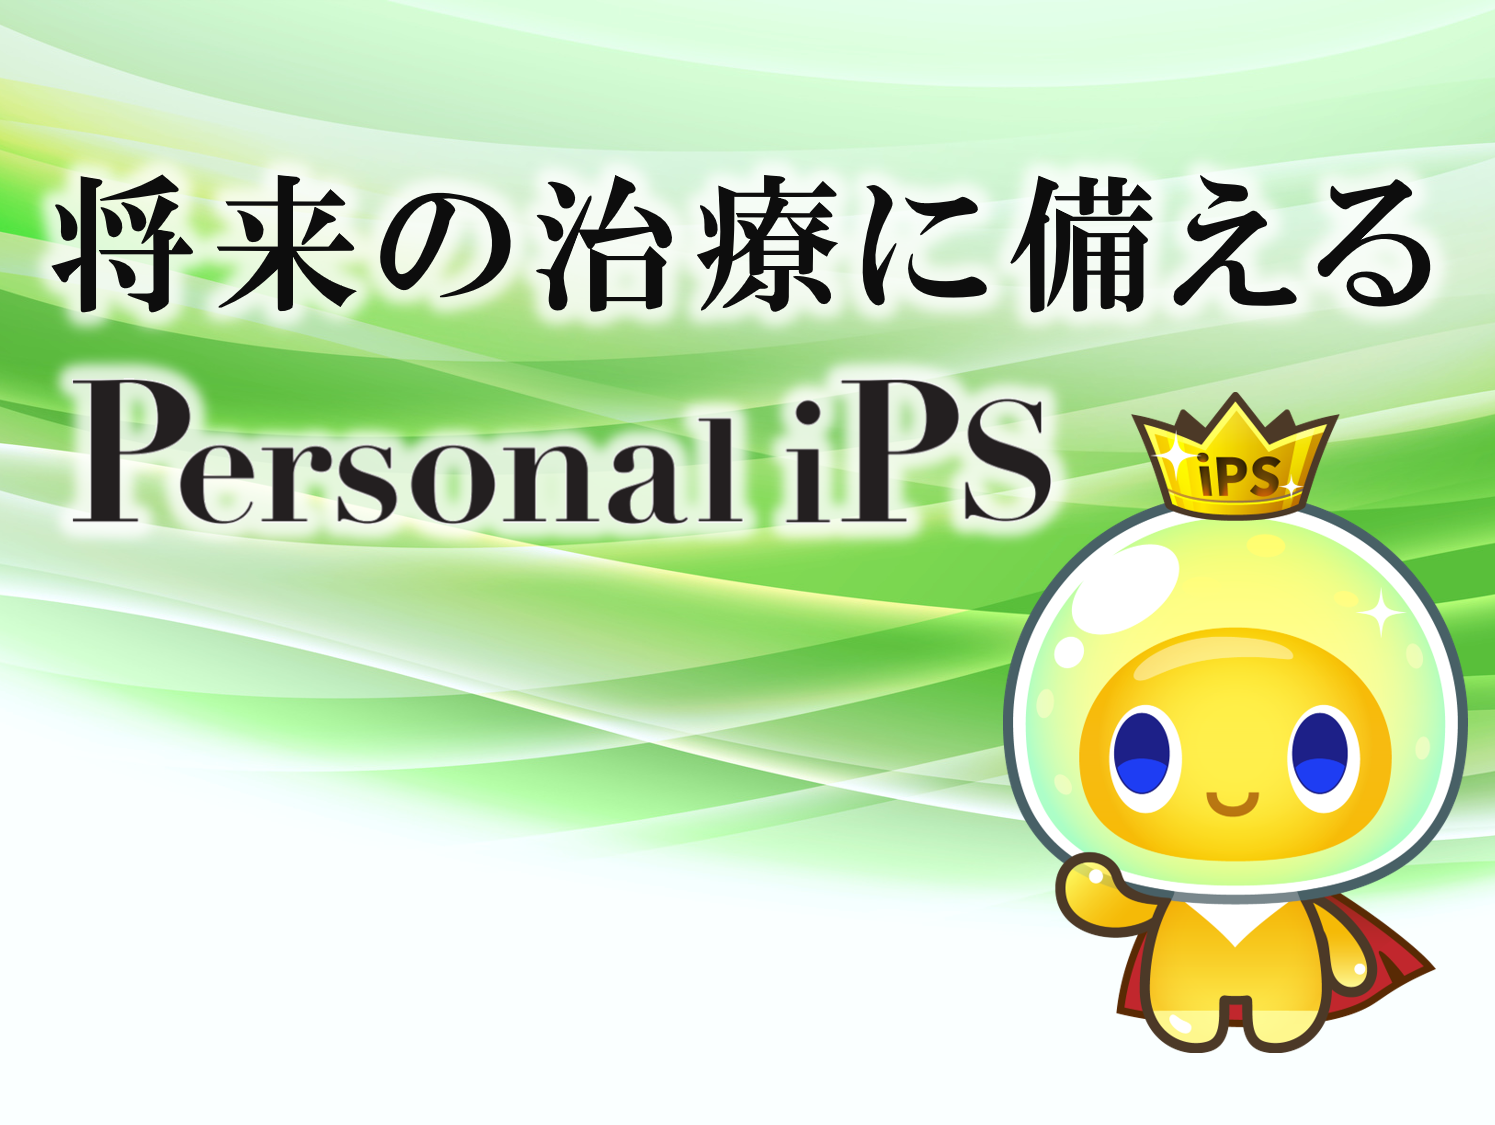 Personal iPS